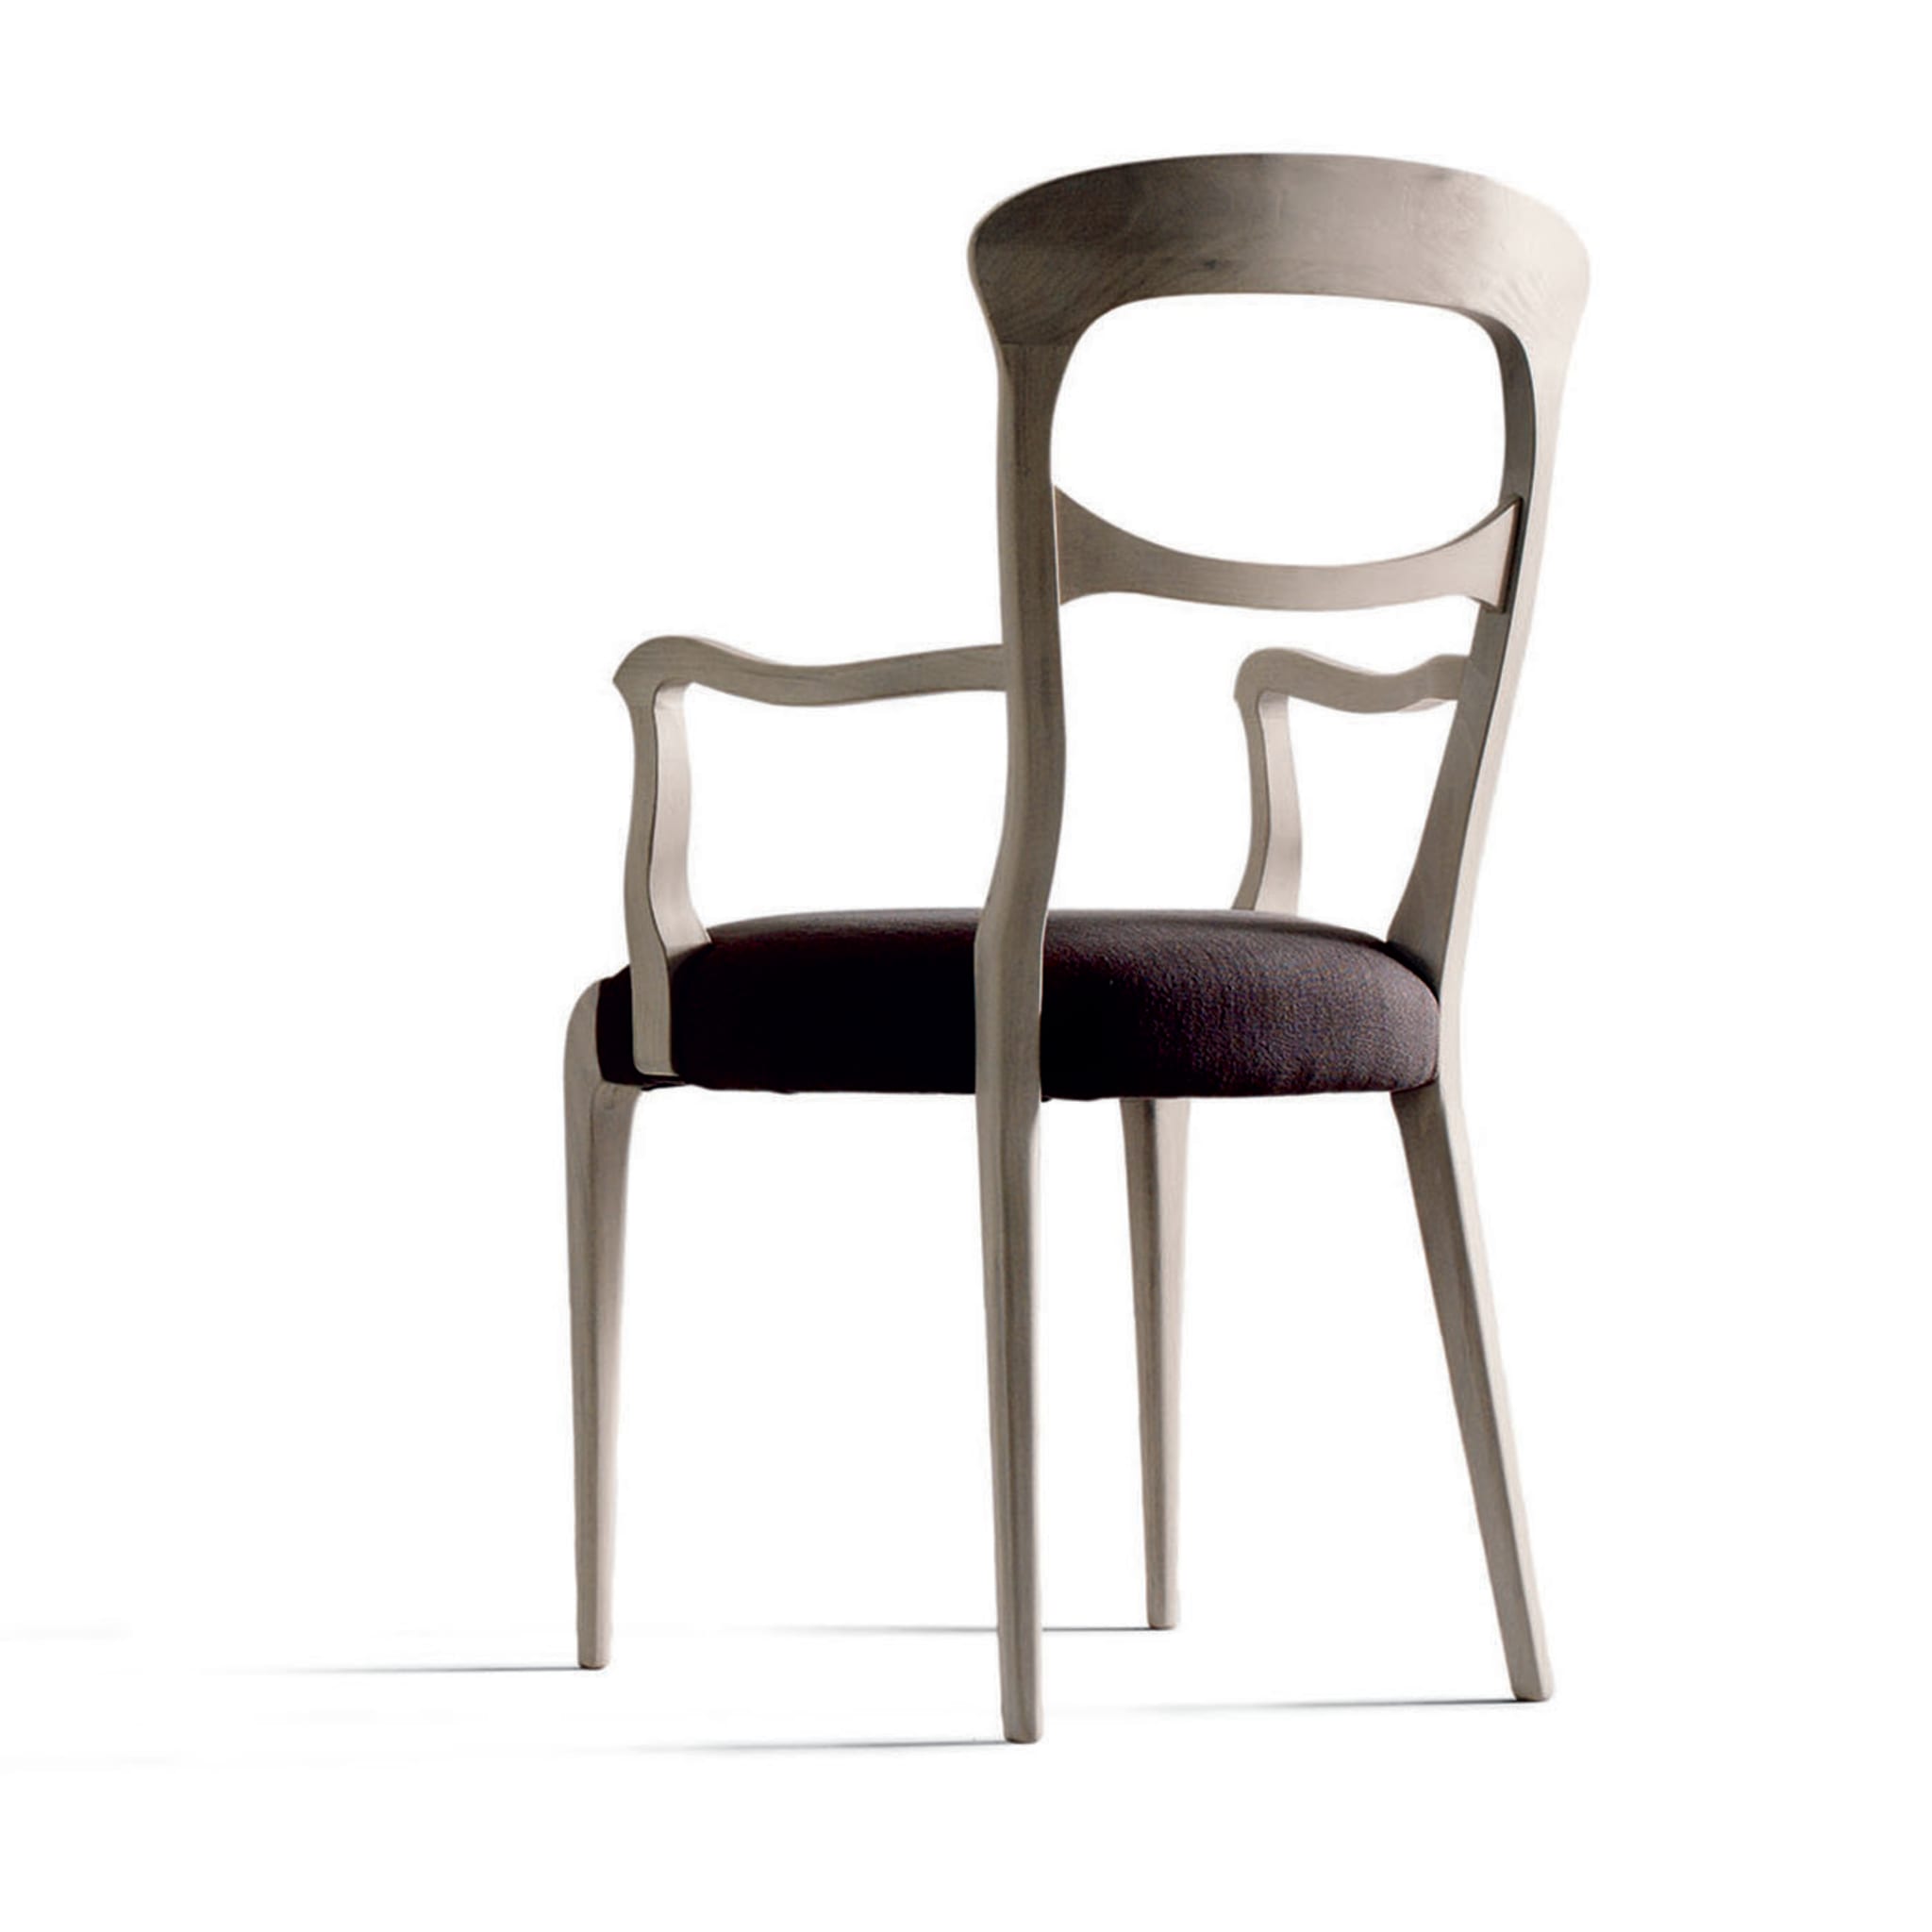 Capotavola chair - Alternative view 1